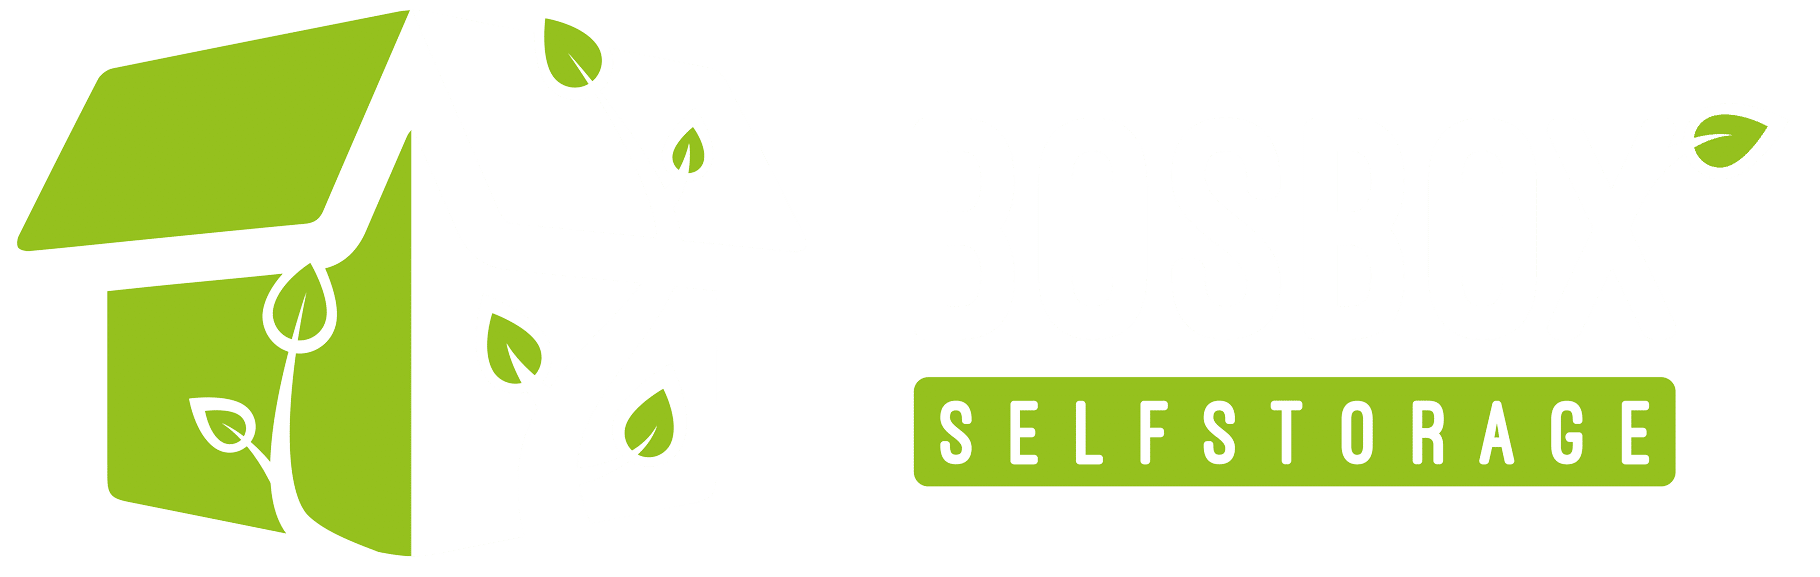 Bosbox Selfstorage Logo